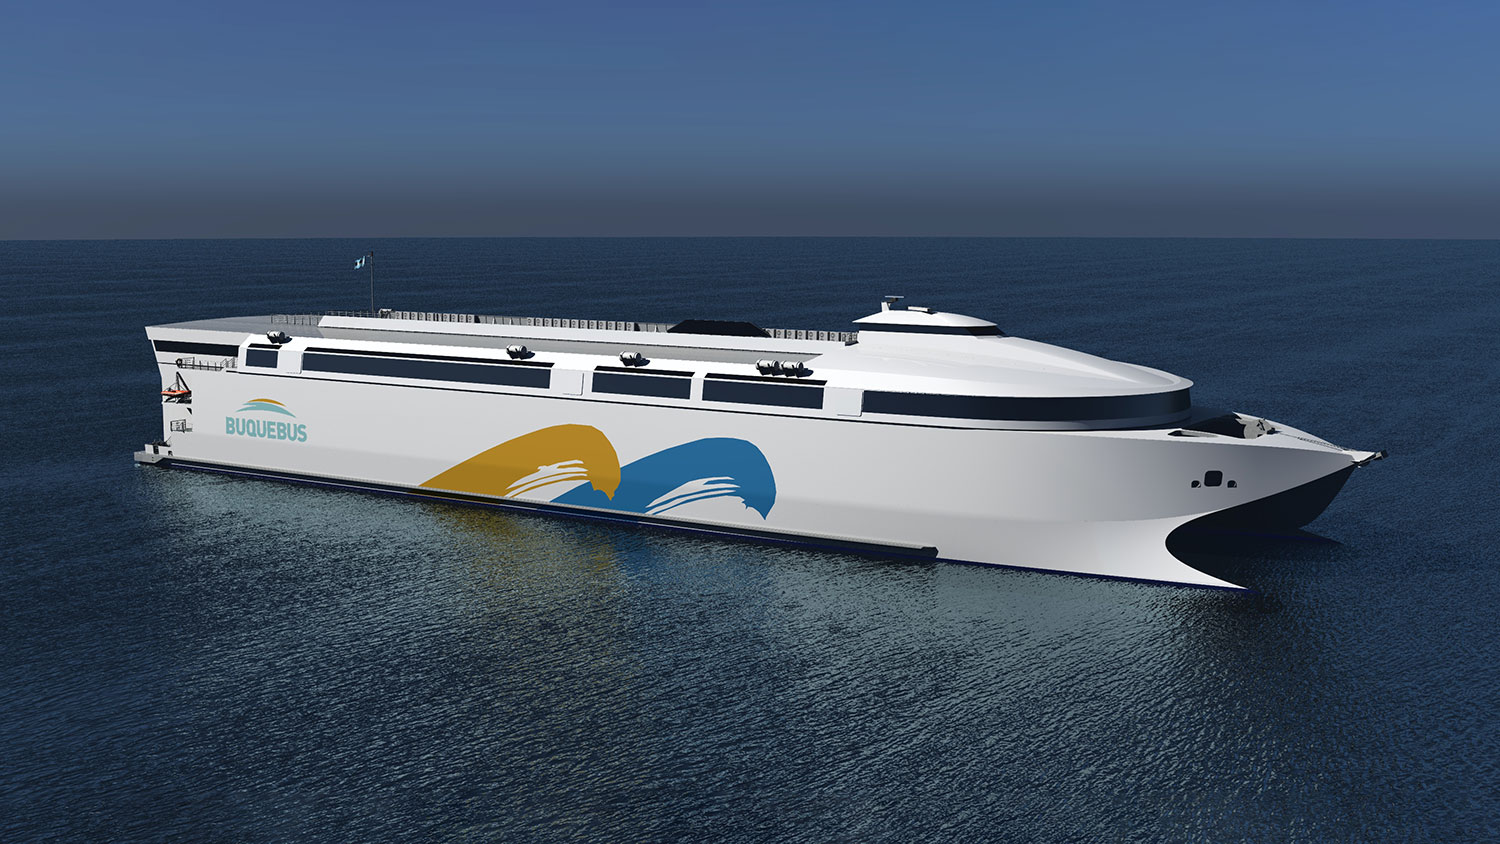 Incat Tasmania has under construction the largest lightweight battery electric ship ever built.